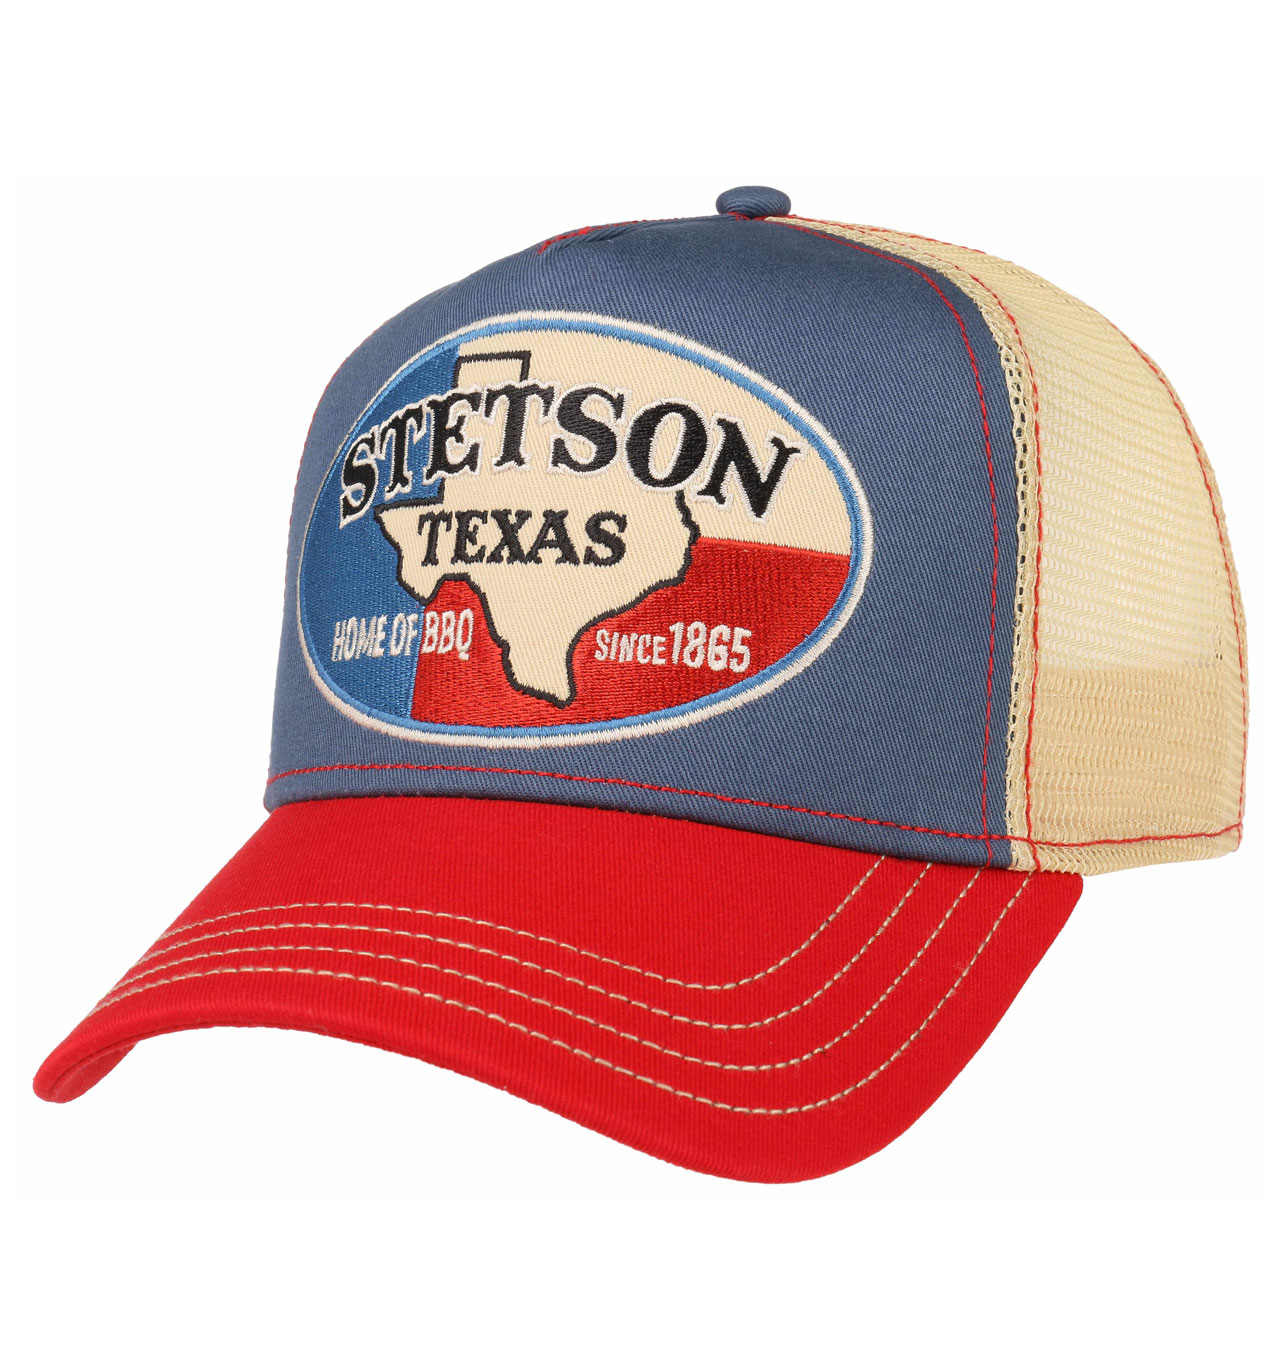 Stetson---Texas-Home-of-BBQ-Trucker-Cap-1